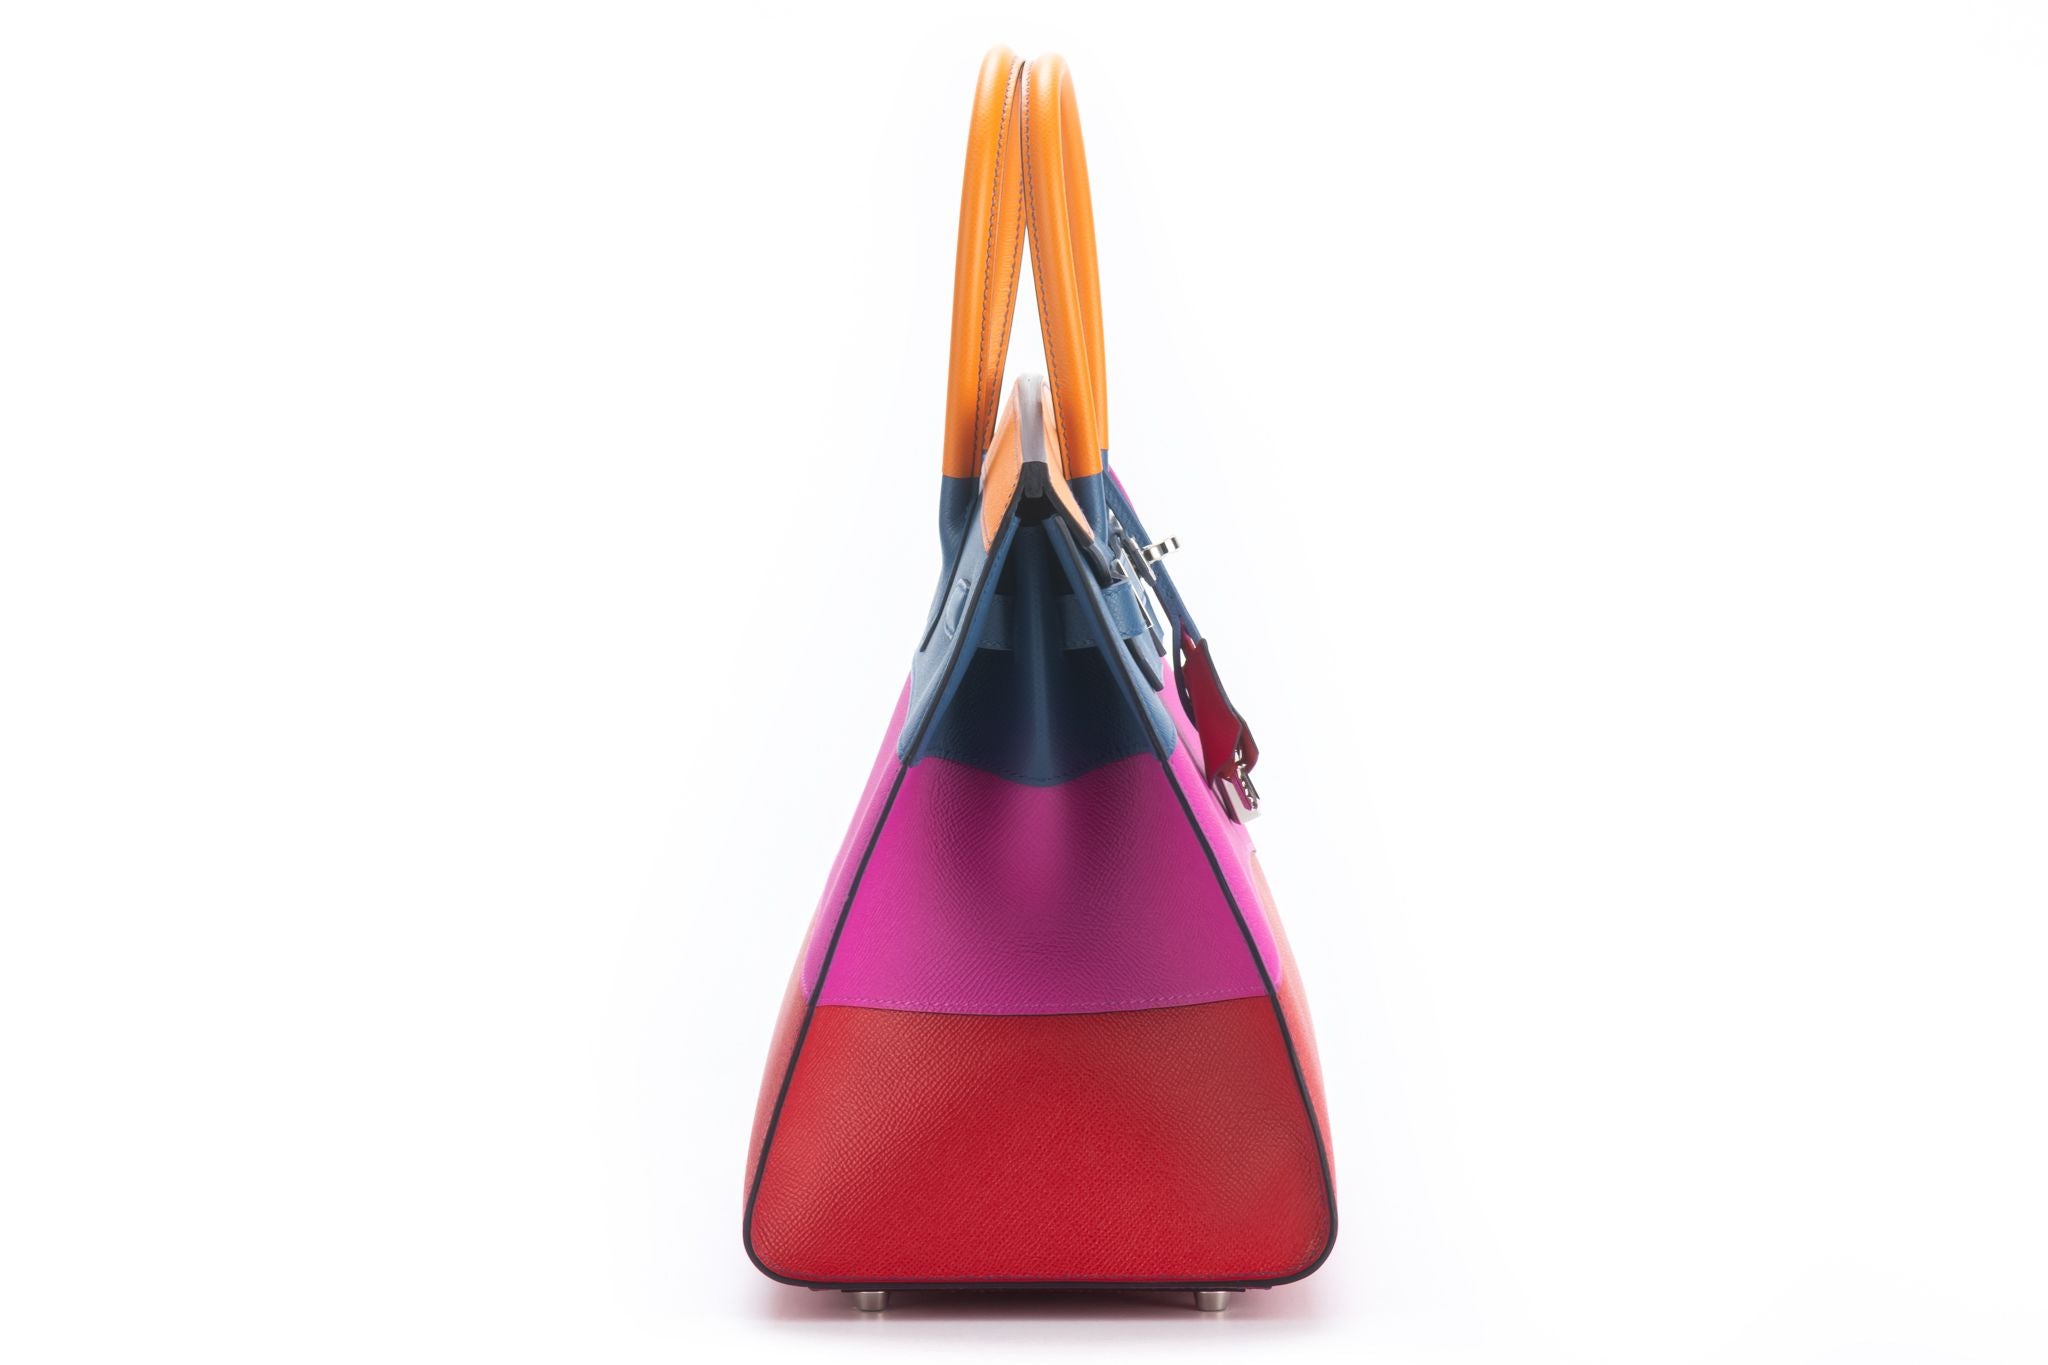 Hermès Birkin 35 cm Rainbow Sunset Handbag in Red Casaque, Magnolia